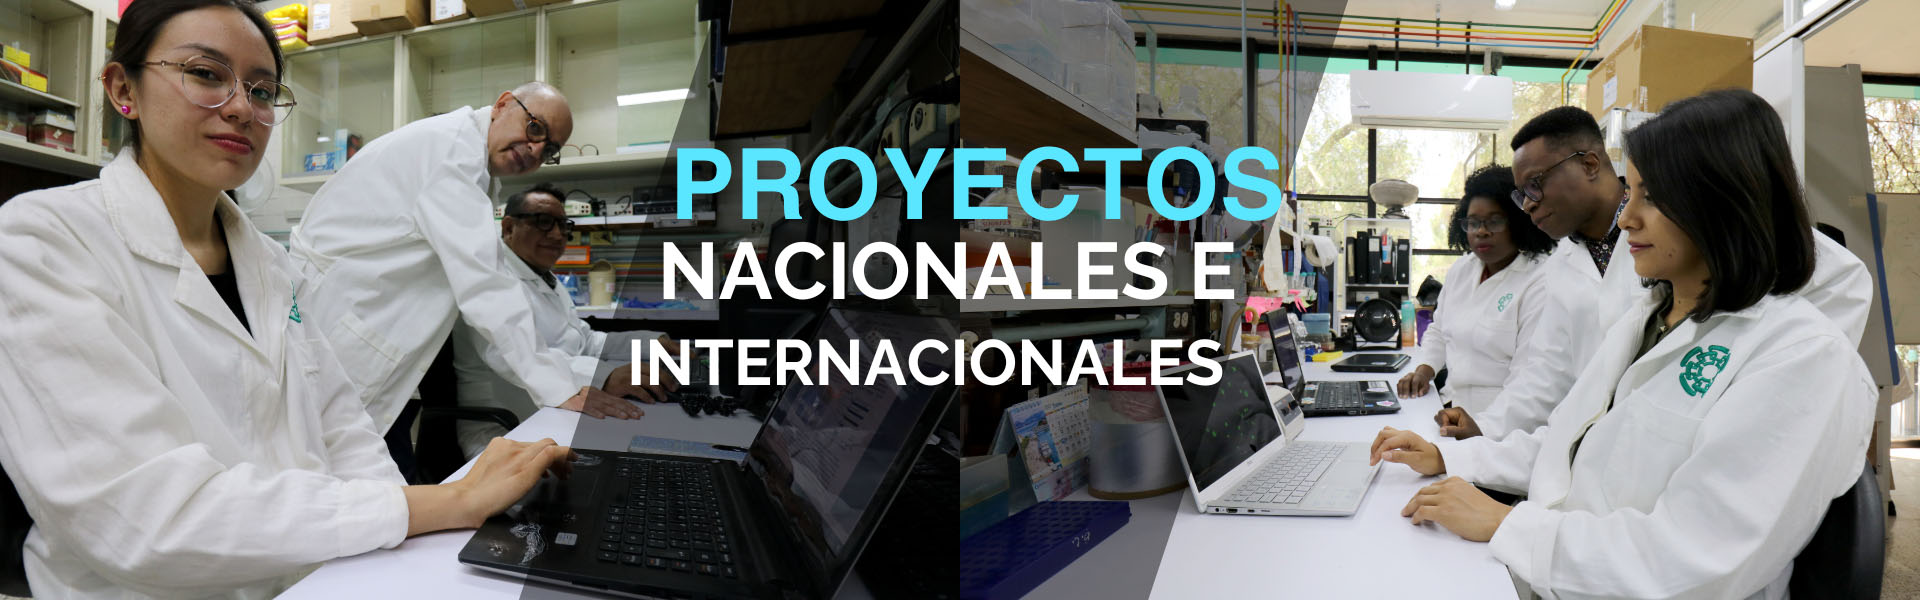 Banner - Proyectos